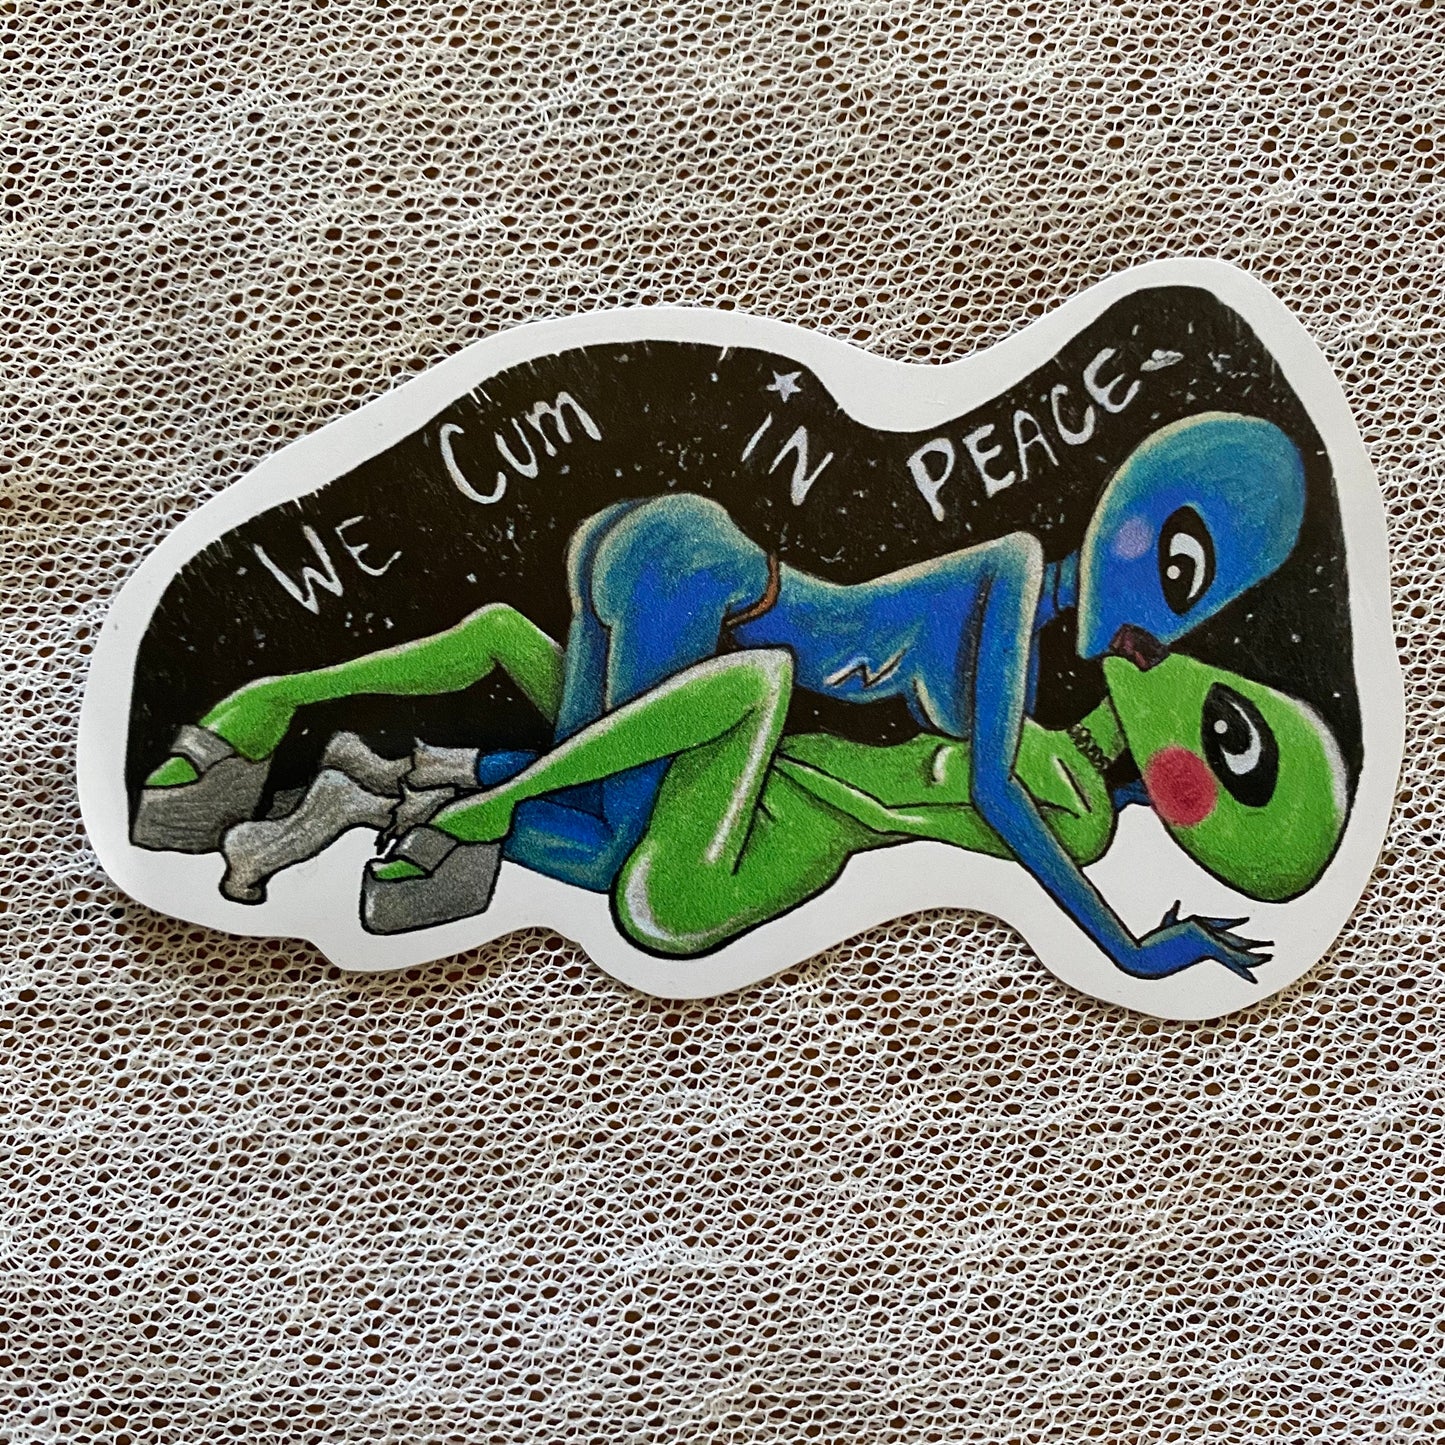 we cum in peace vinyl sticker